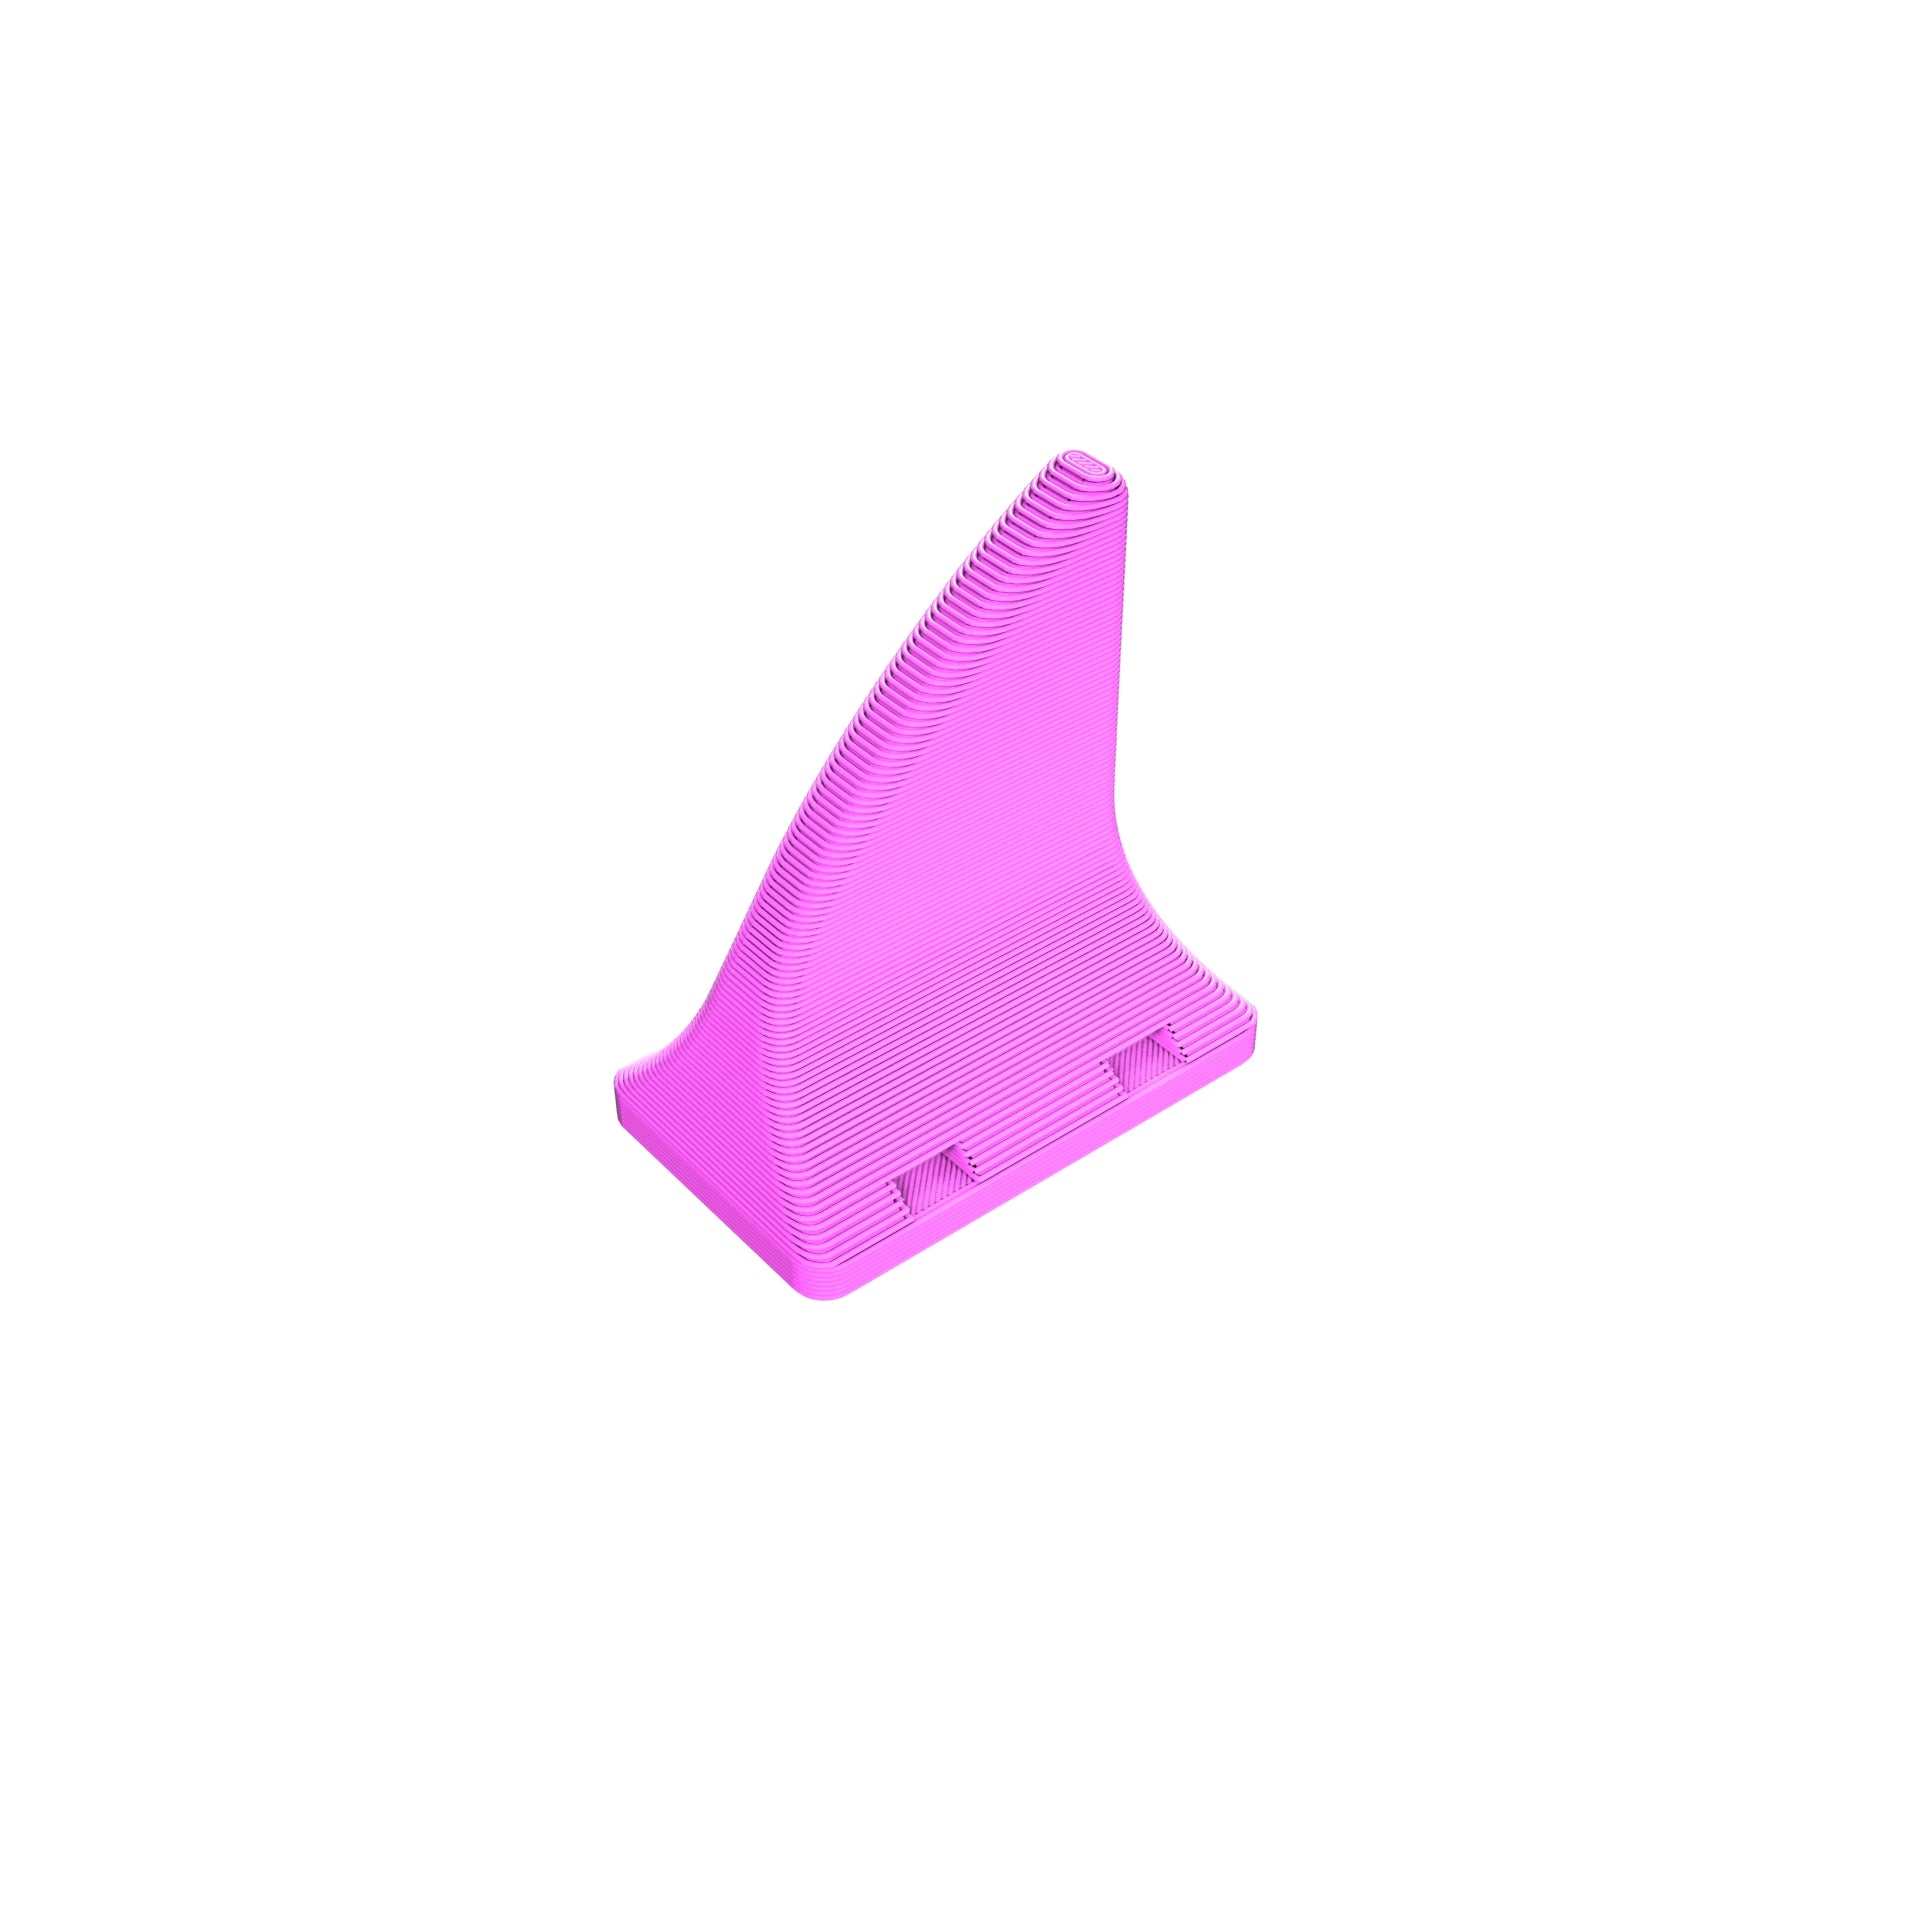 FPV Drone 3D Printed Accessory Shark Fin TPU Turtle Mode Pink